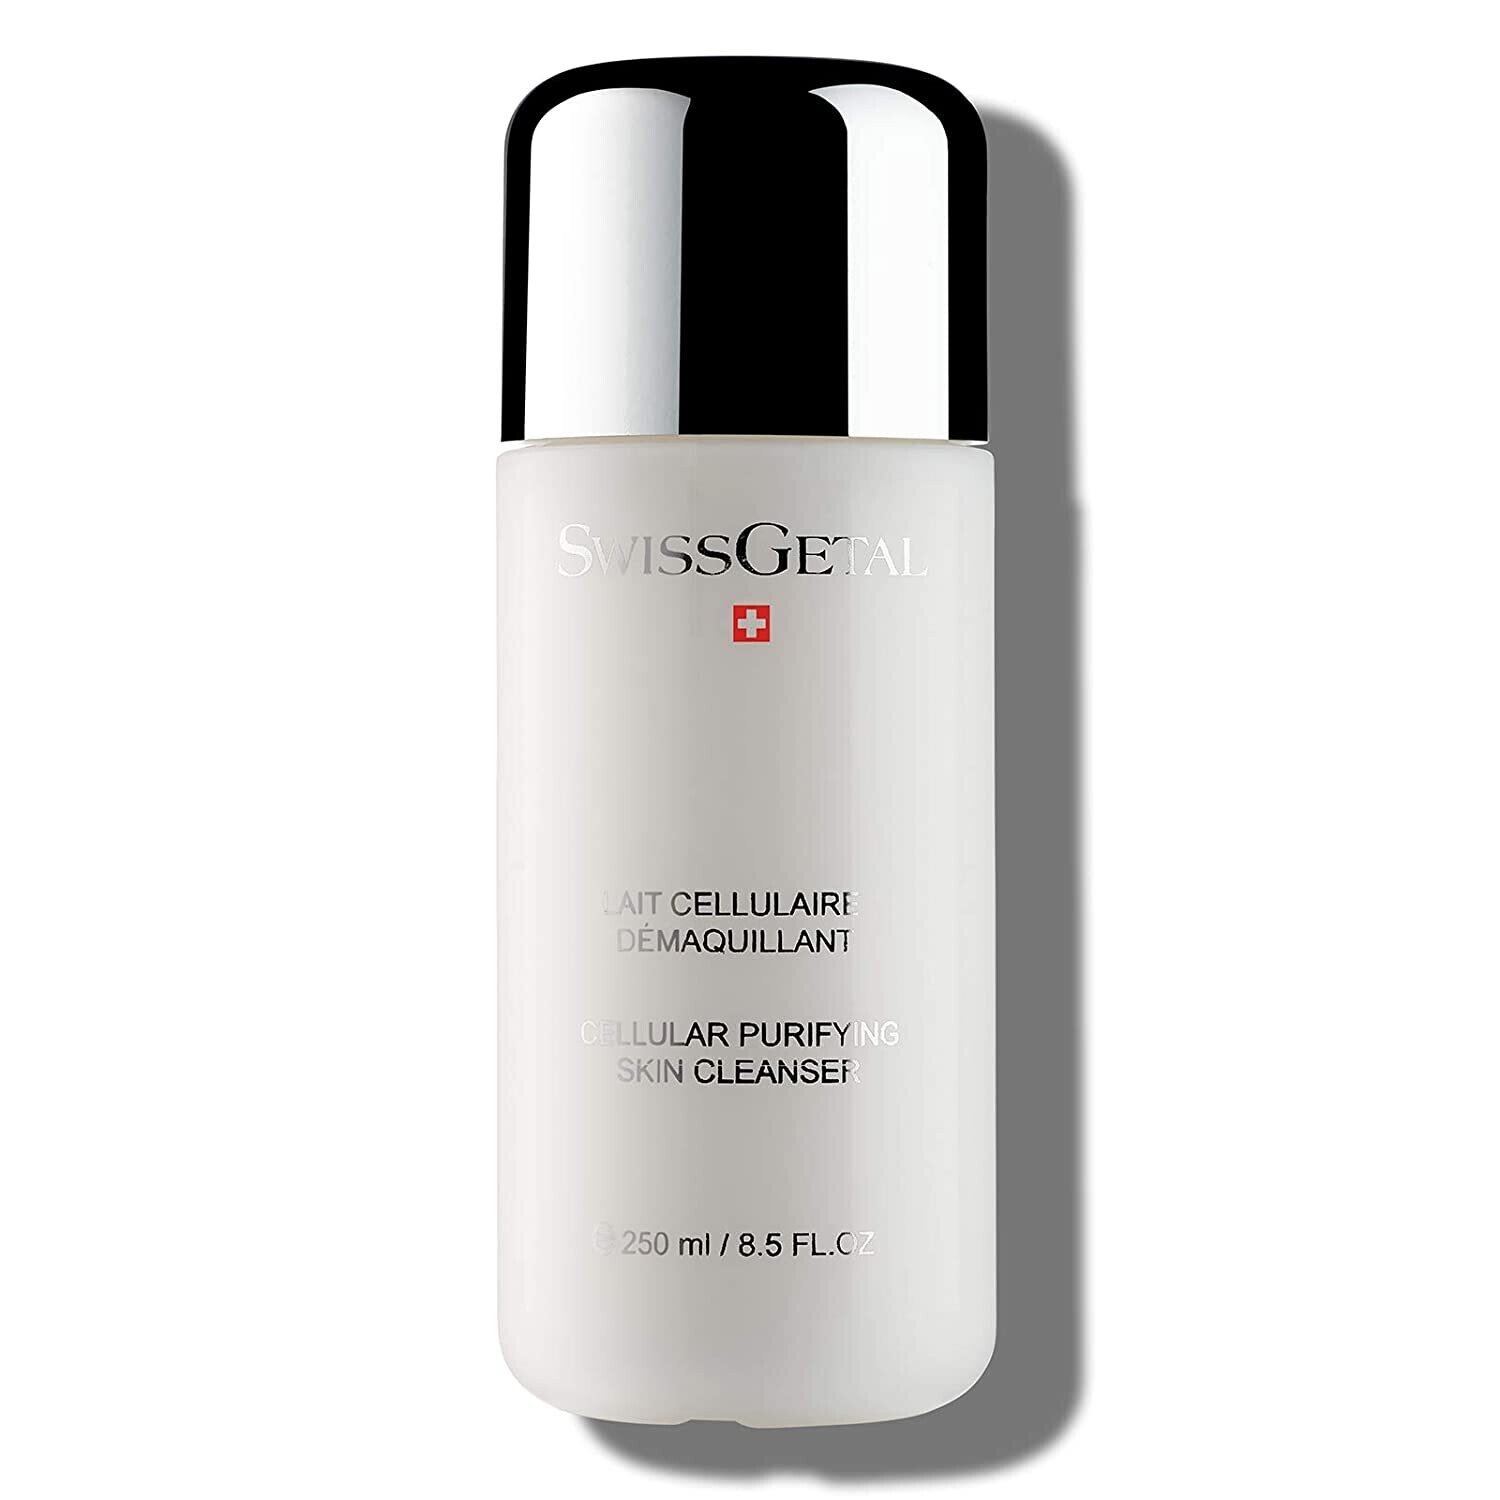 SwissGetal Cellular Purifying Skin Cleanser